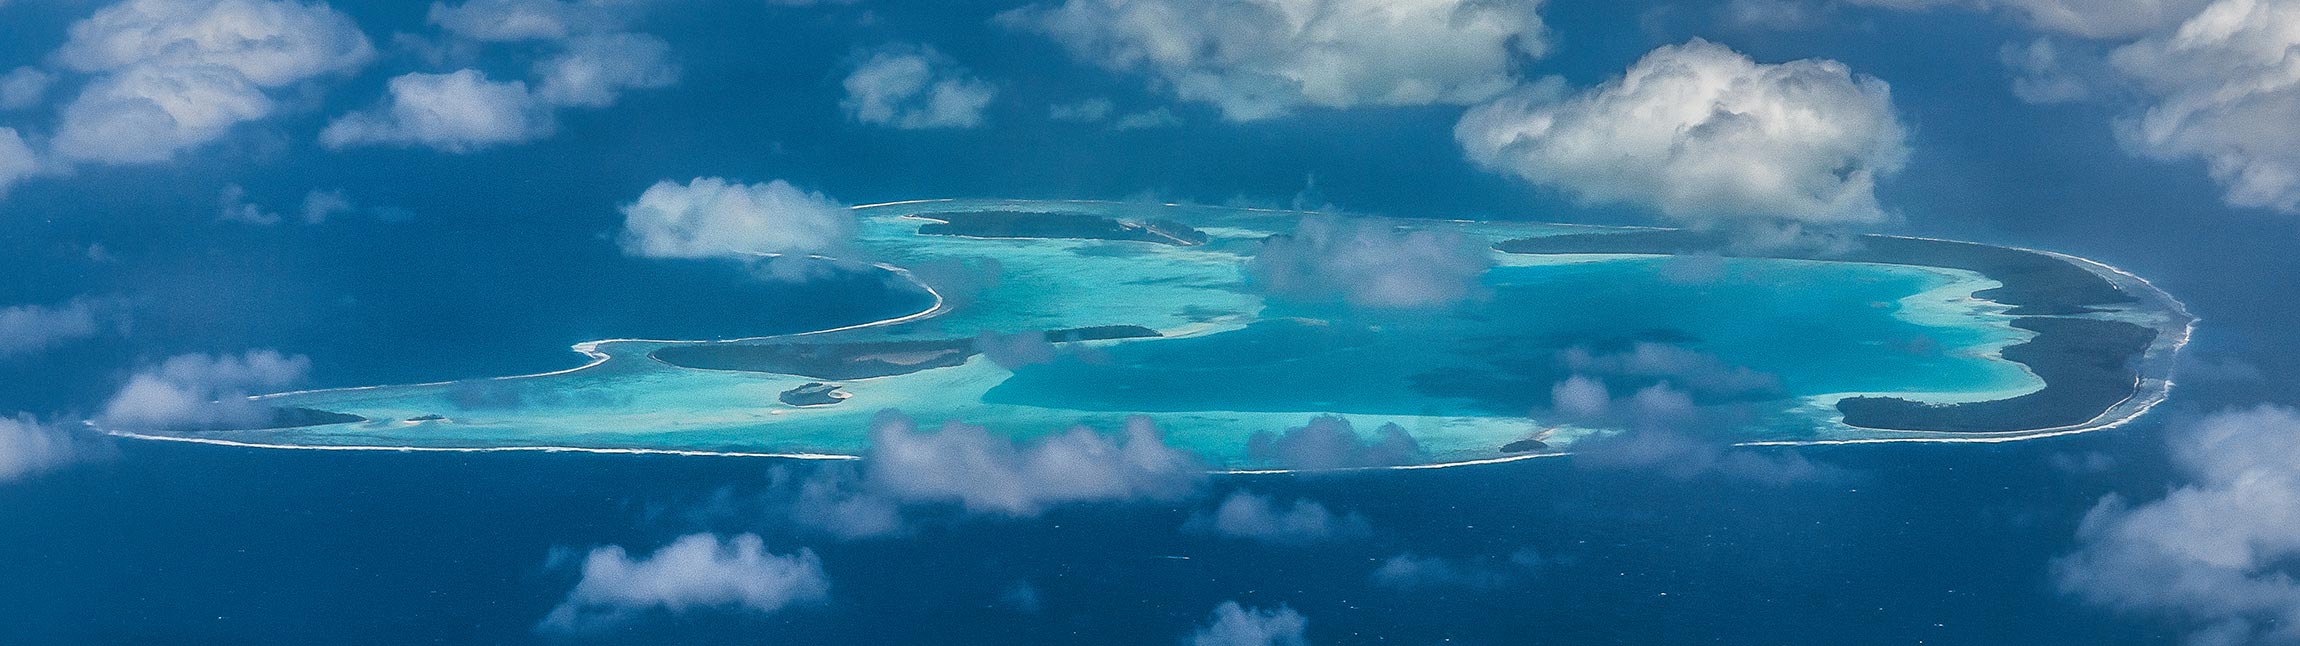 L'atoll de Tikehau vue d'avion - Topdive